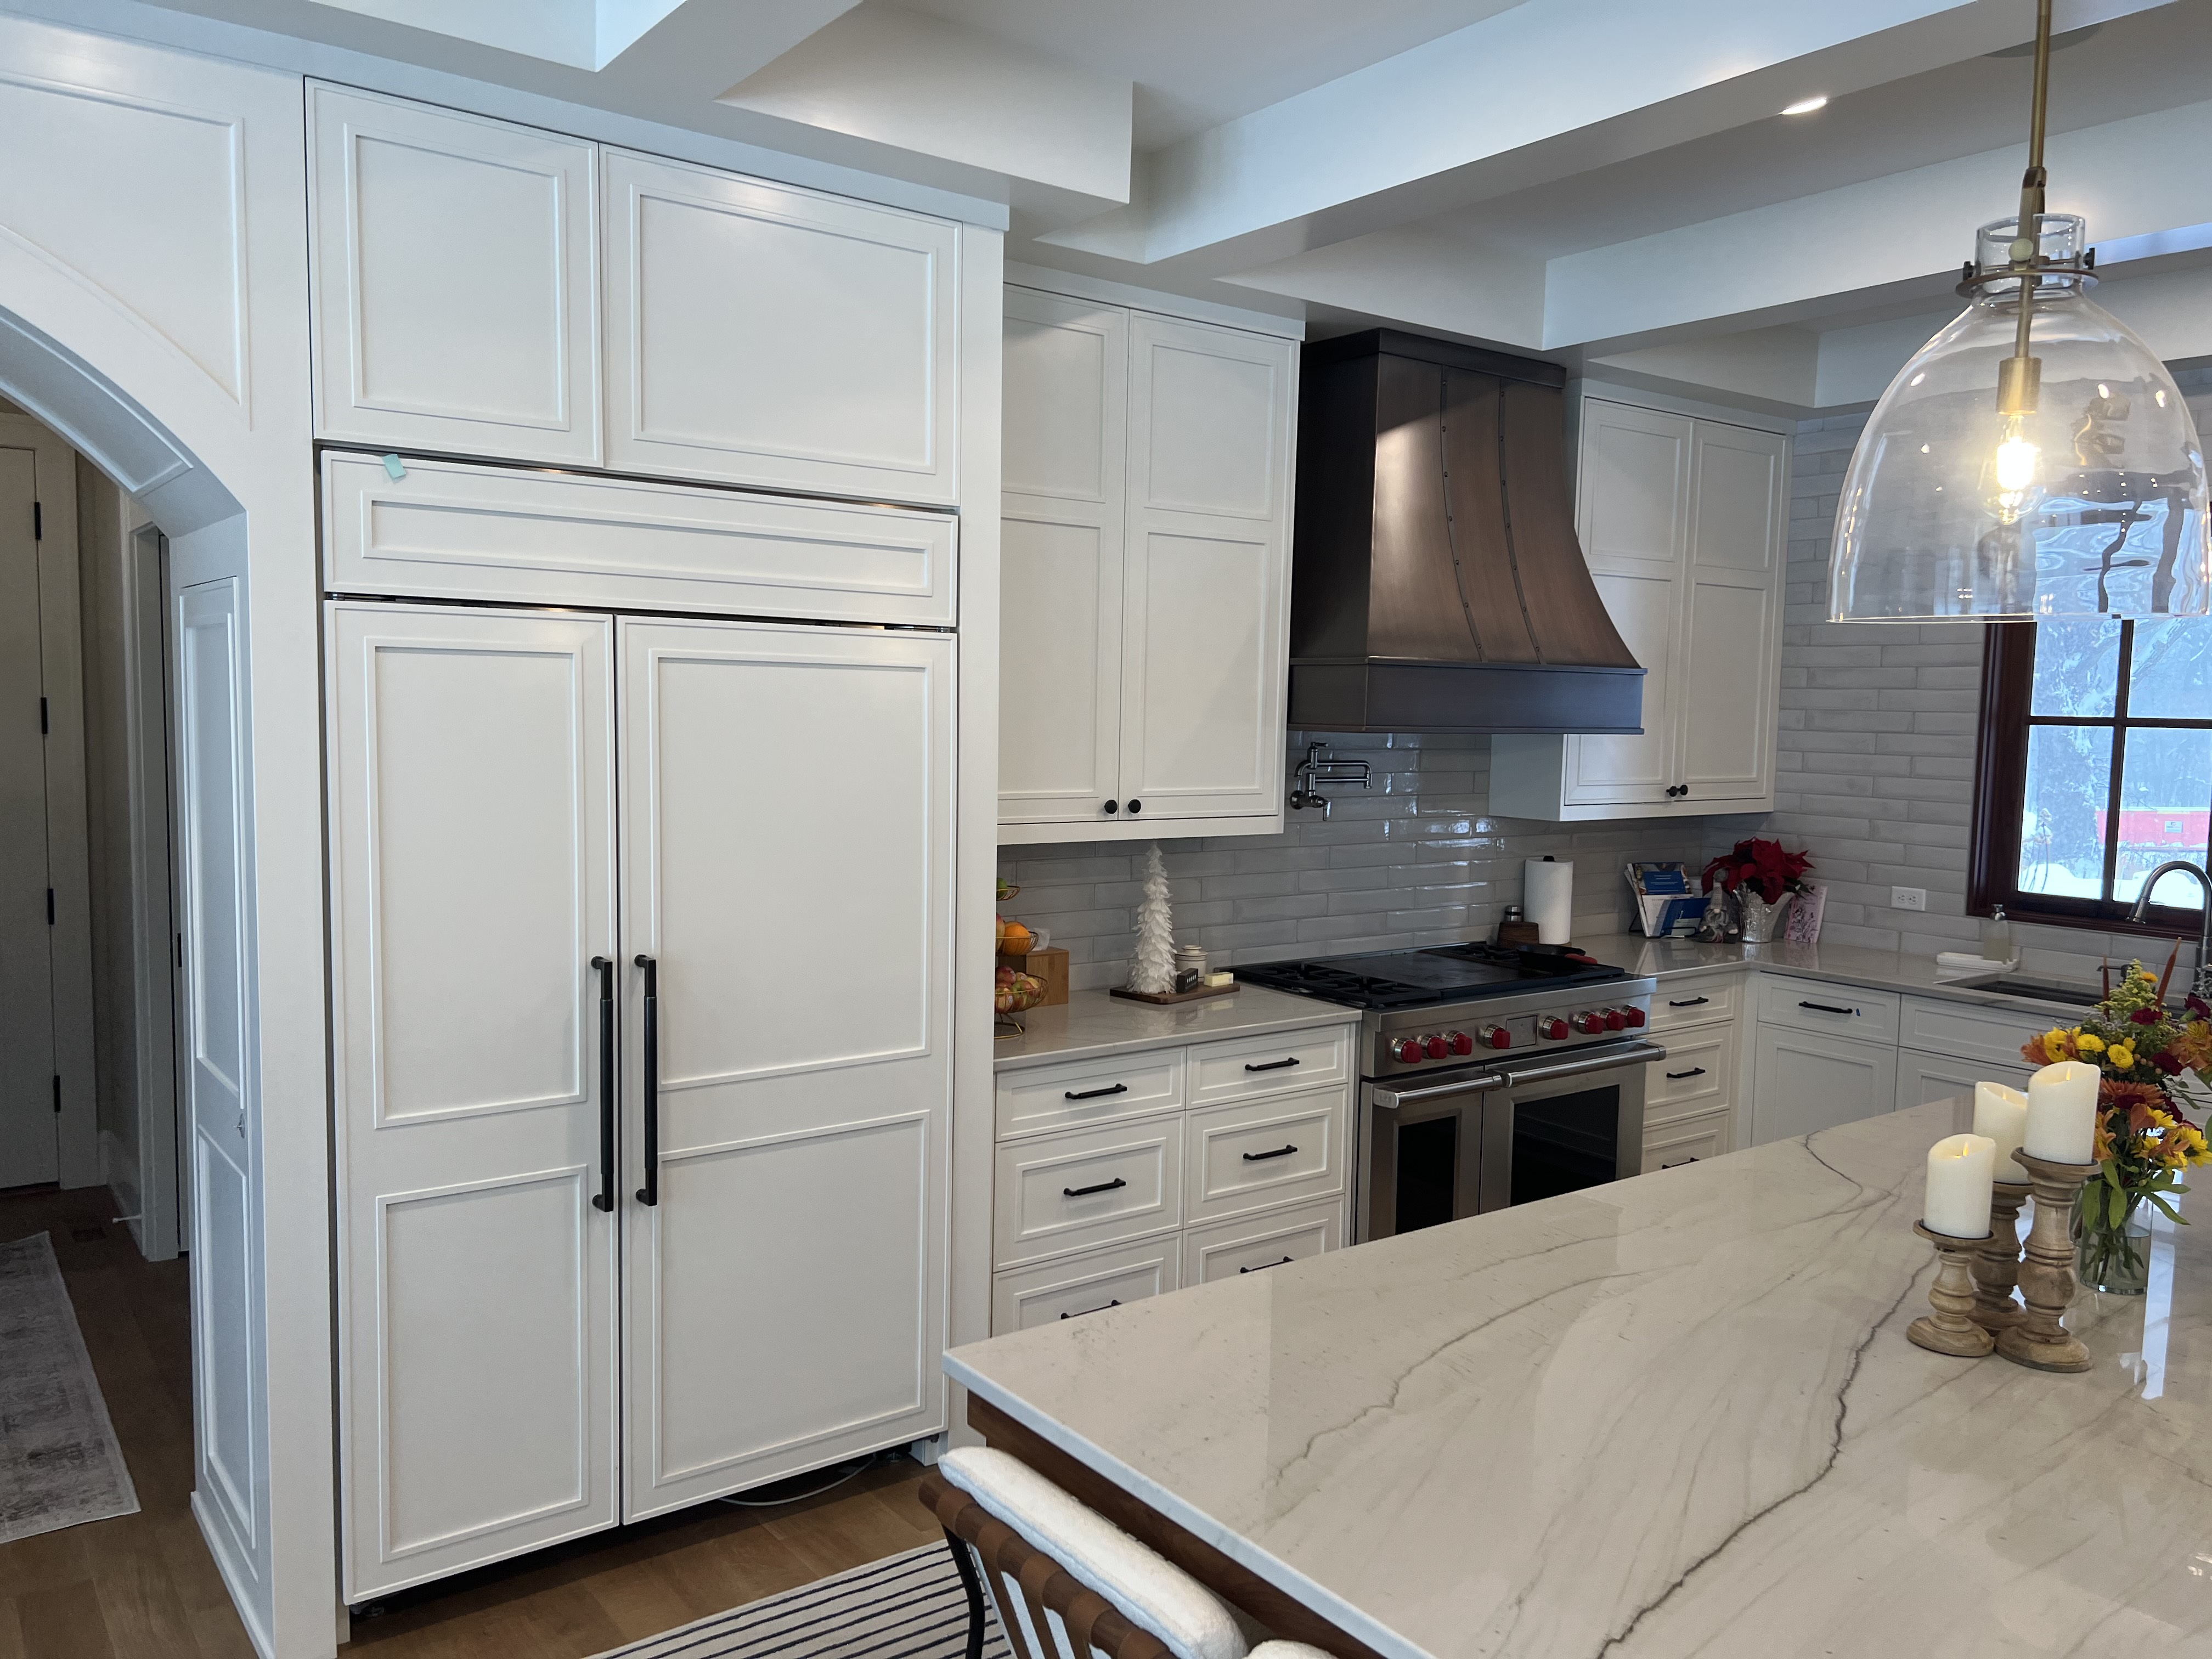 Luxurious marble kitchen countertops, french kitchen design with white kitchen cabinets, stunning white tile backsplash, range hood